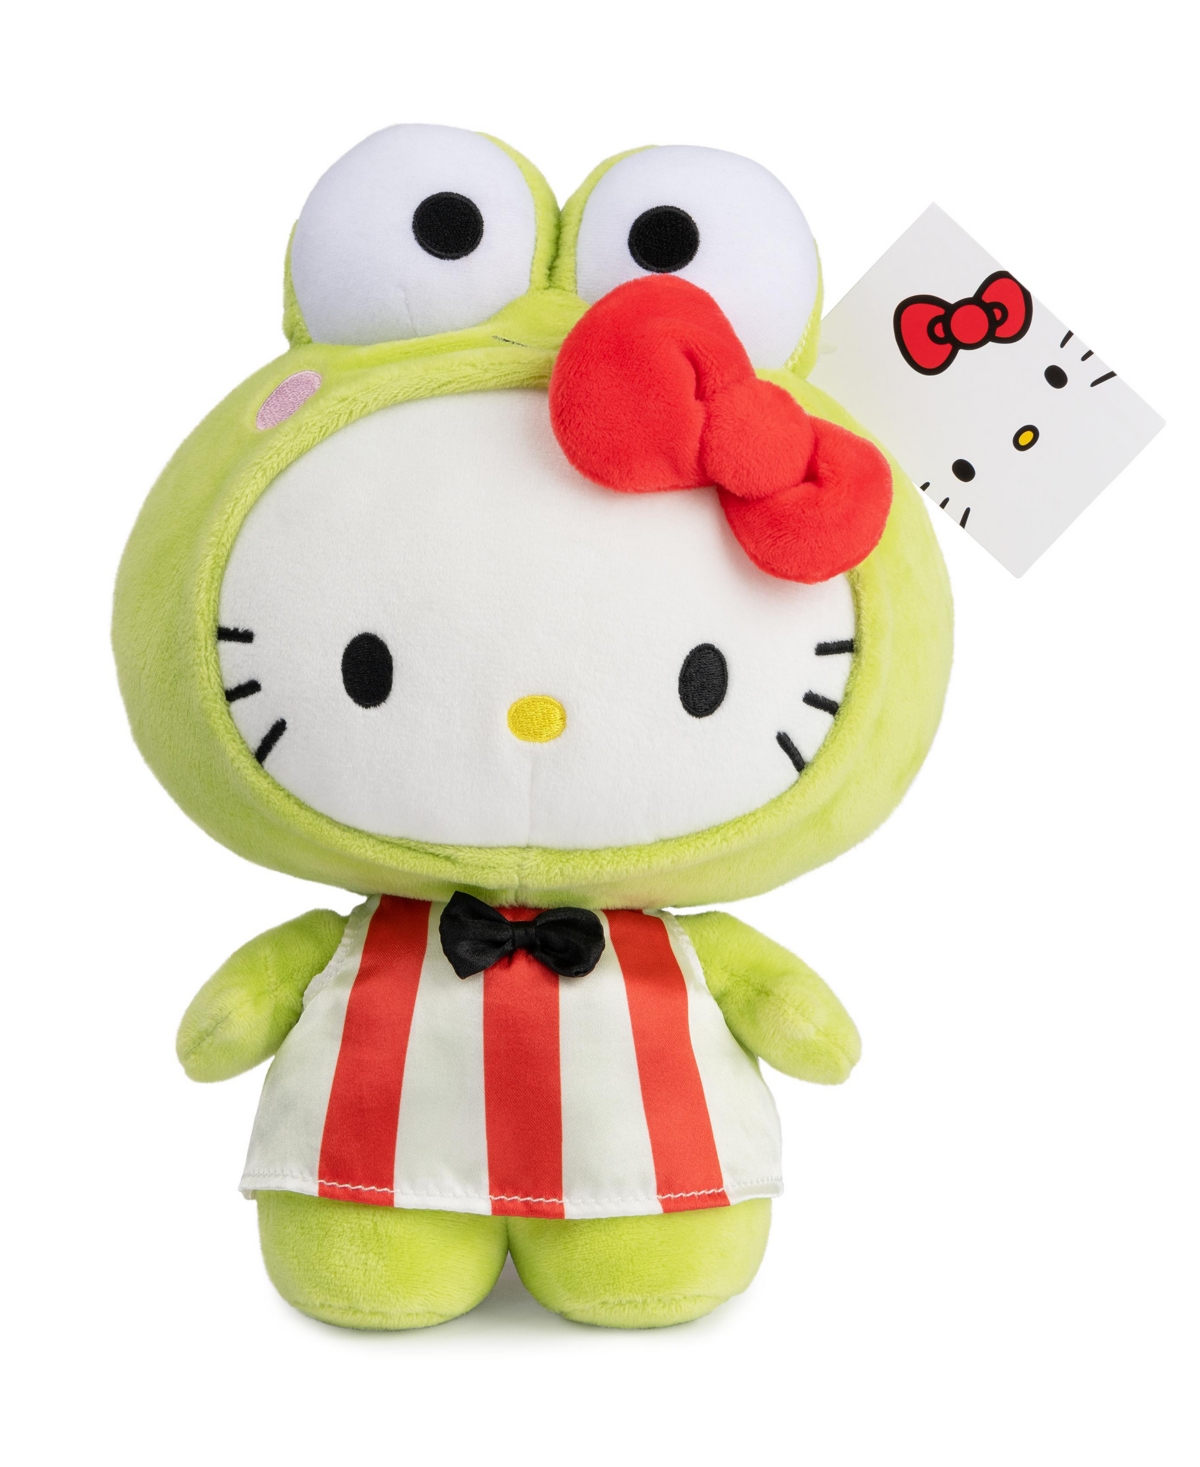 Hello Kitty Keroppi Plush Toy, Premium Stuffed Animal, Green, 9.5" In Multi-color